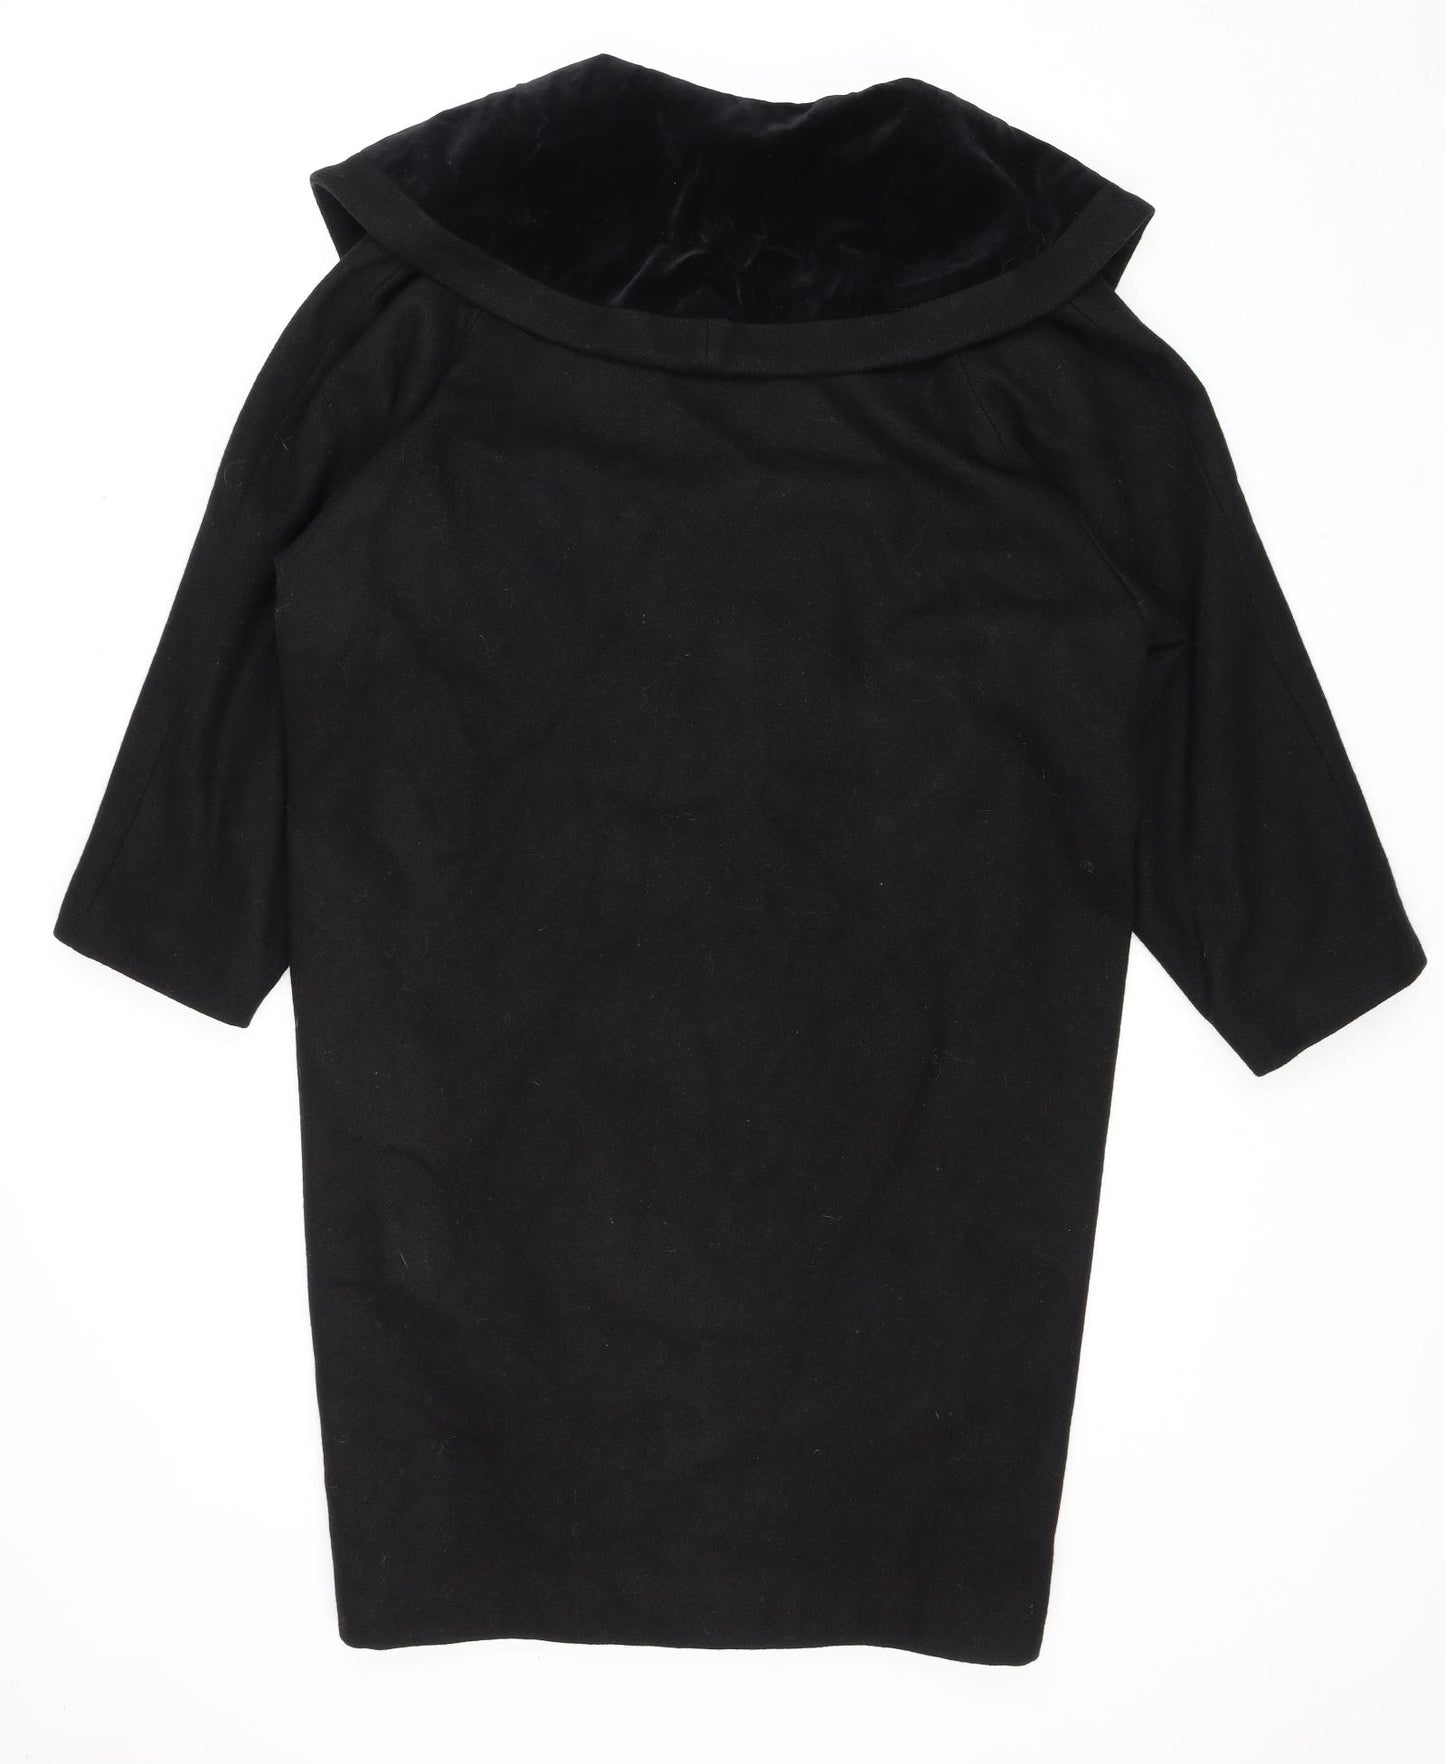 Miss Selfridge Womens Black Overcoat Coat Size 10 Button